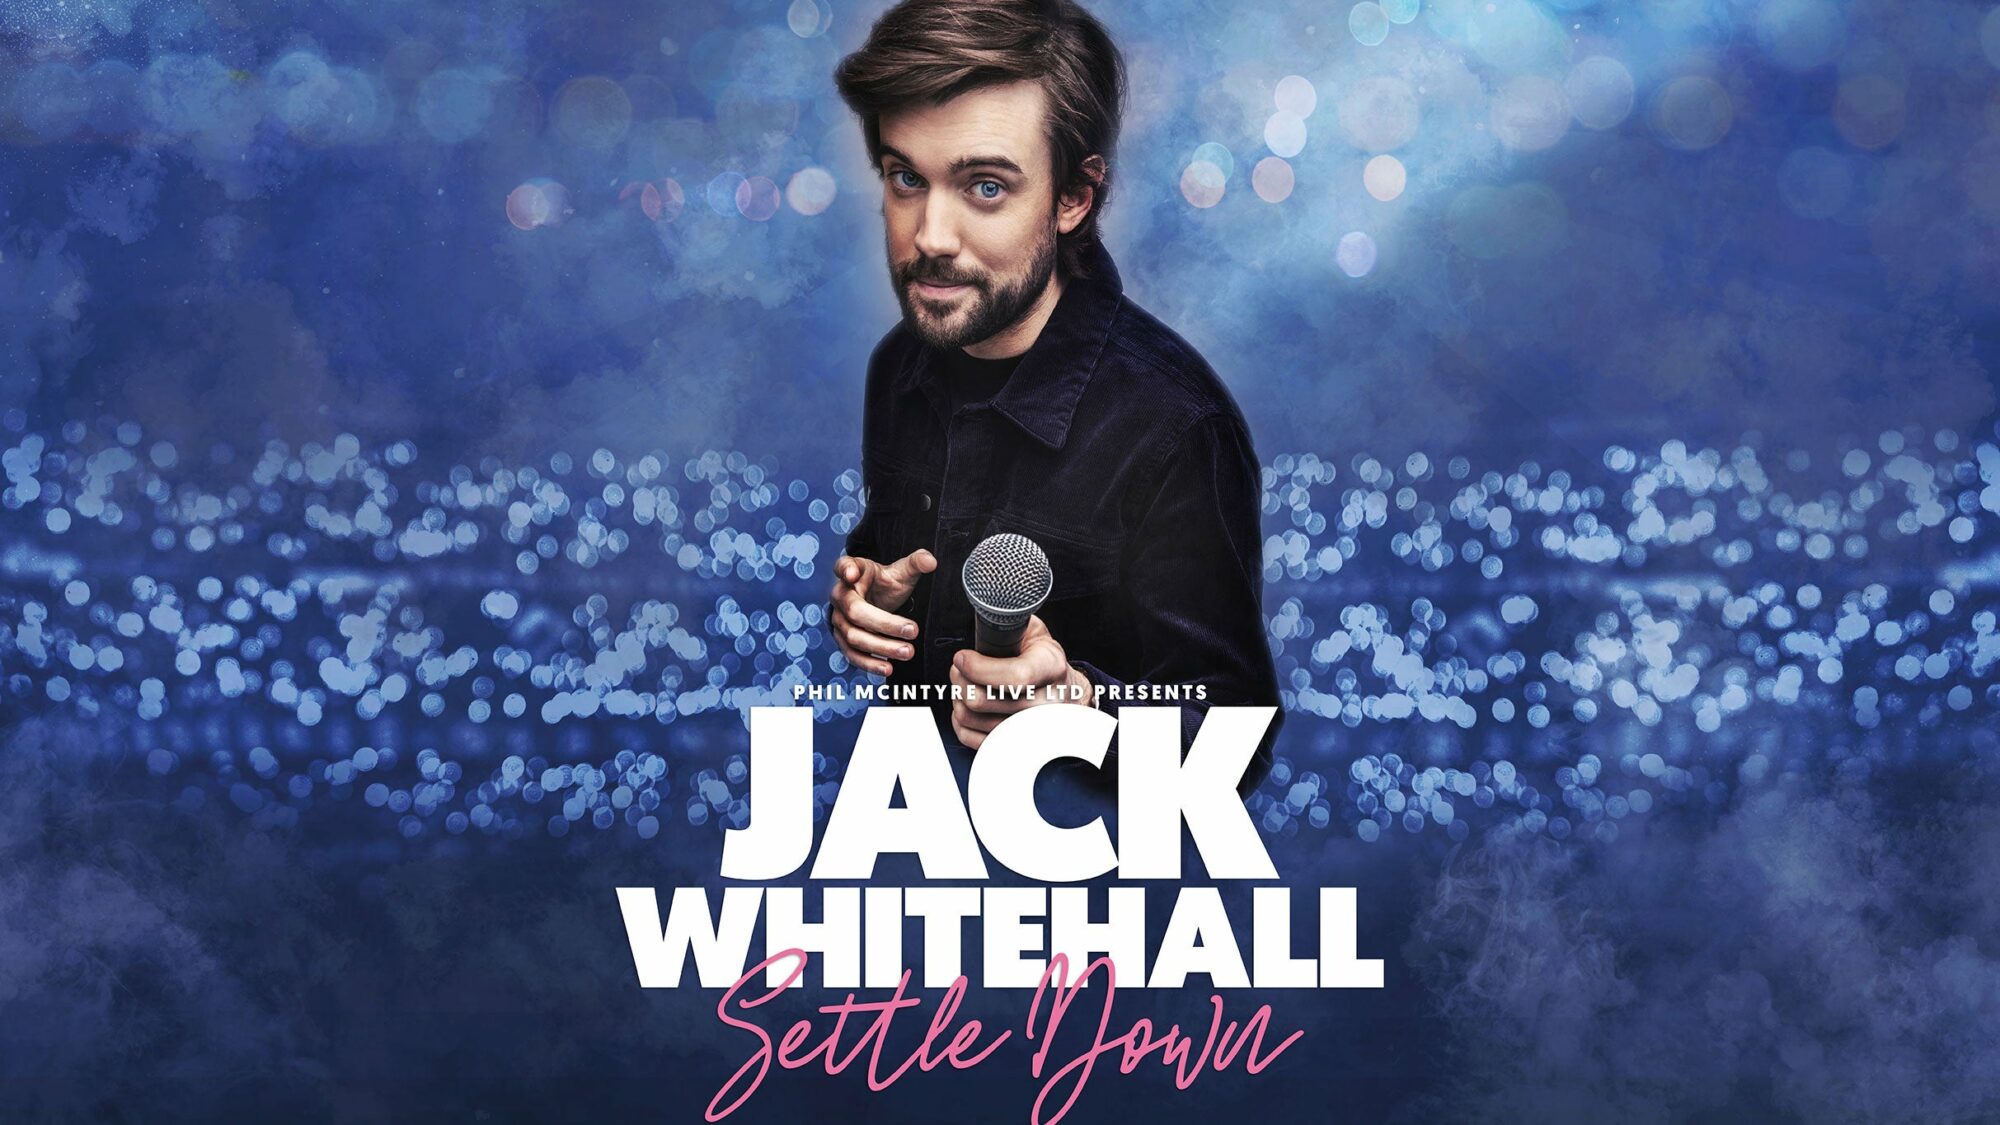 Jack Whitehall: Settle Down at Utilita Arena Sheffield, Sheffield